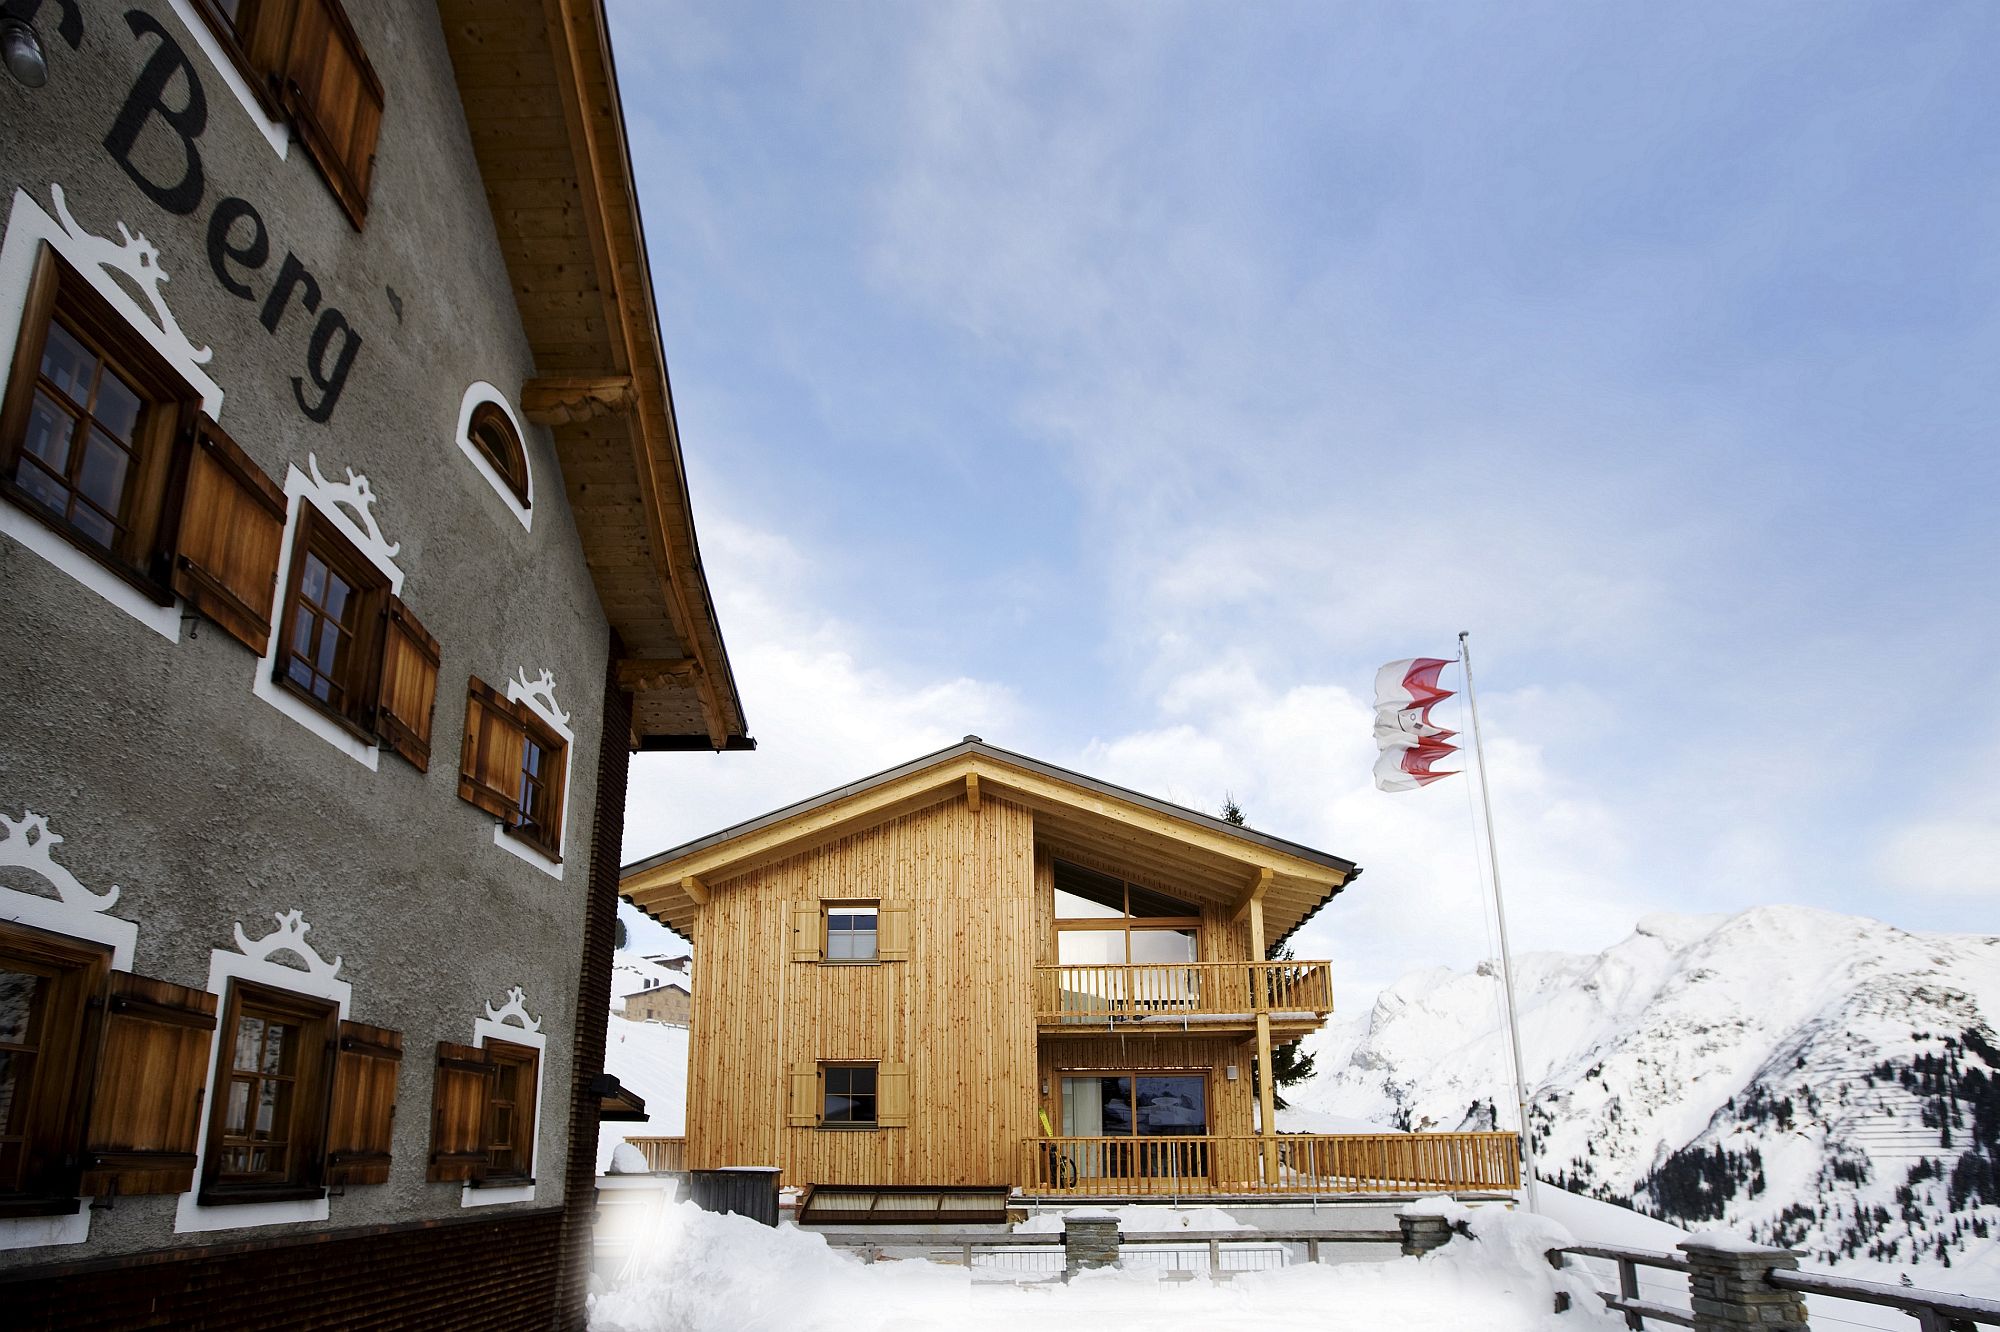 Stunning Hotel Goldener Berg offers in the Austrian Alps